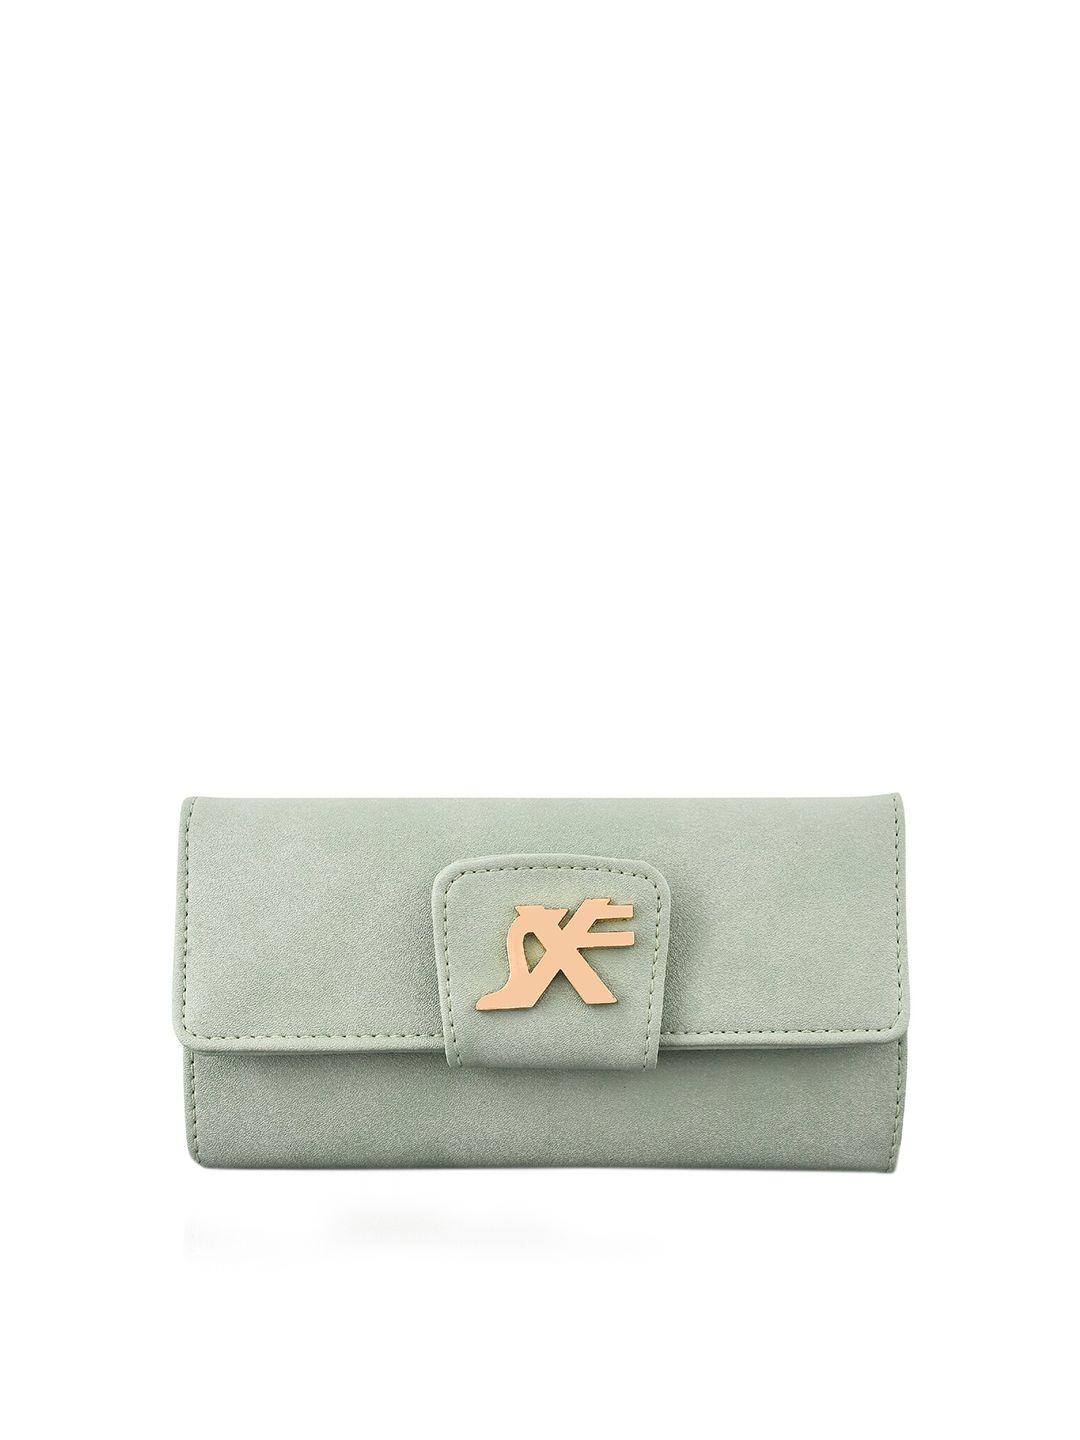 sxf speed x fashion green purse clutch